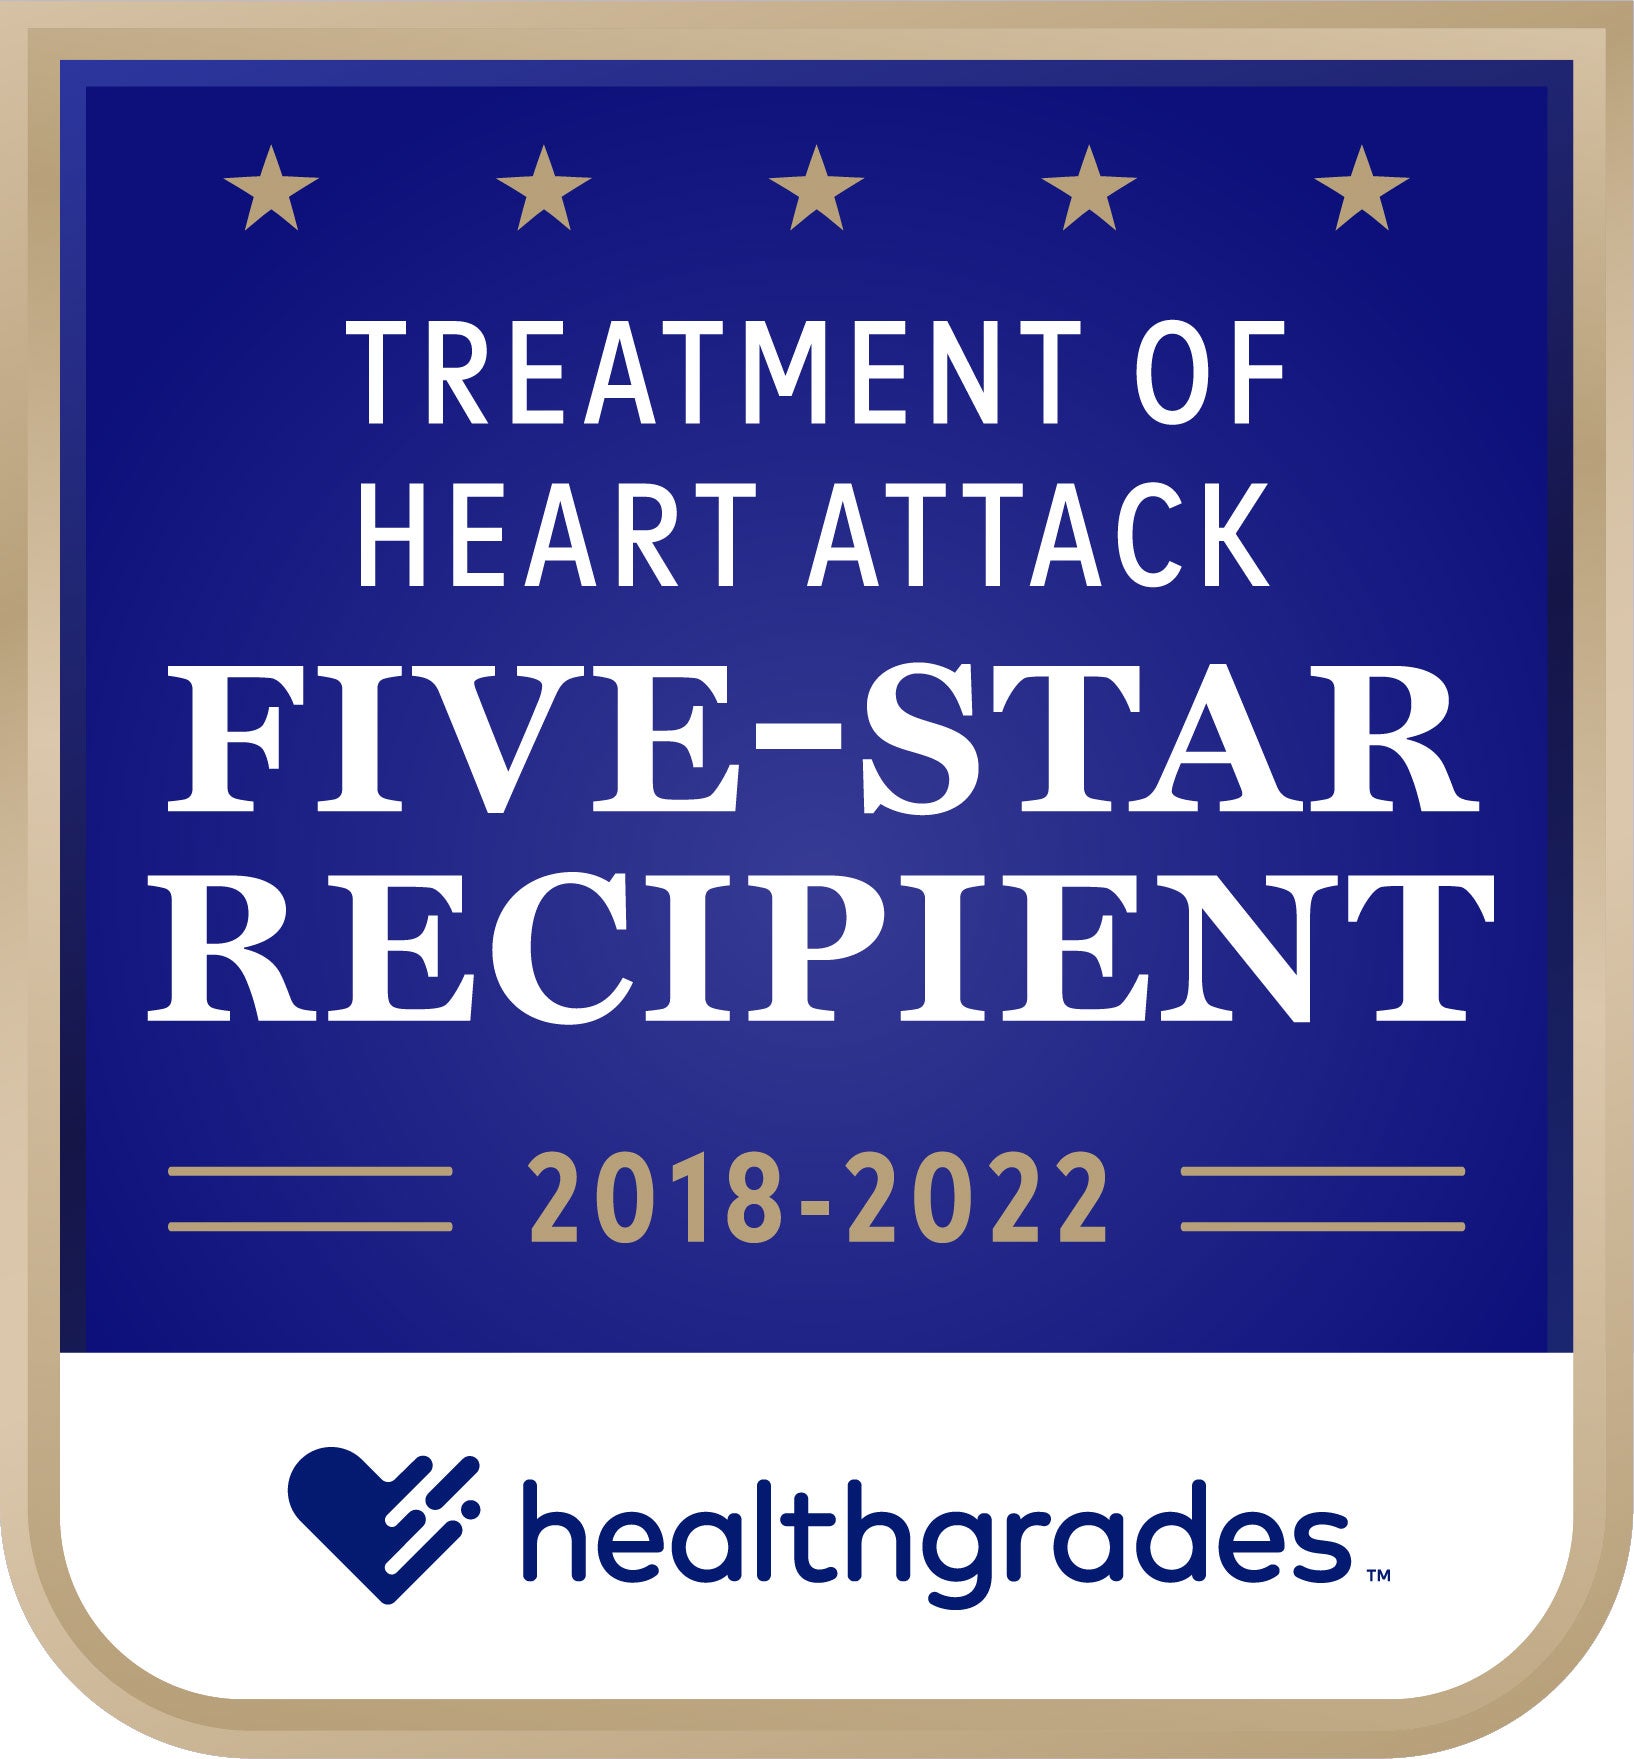 Healthgrades Award - 5 Star Treatment of Heart Attack